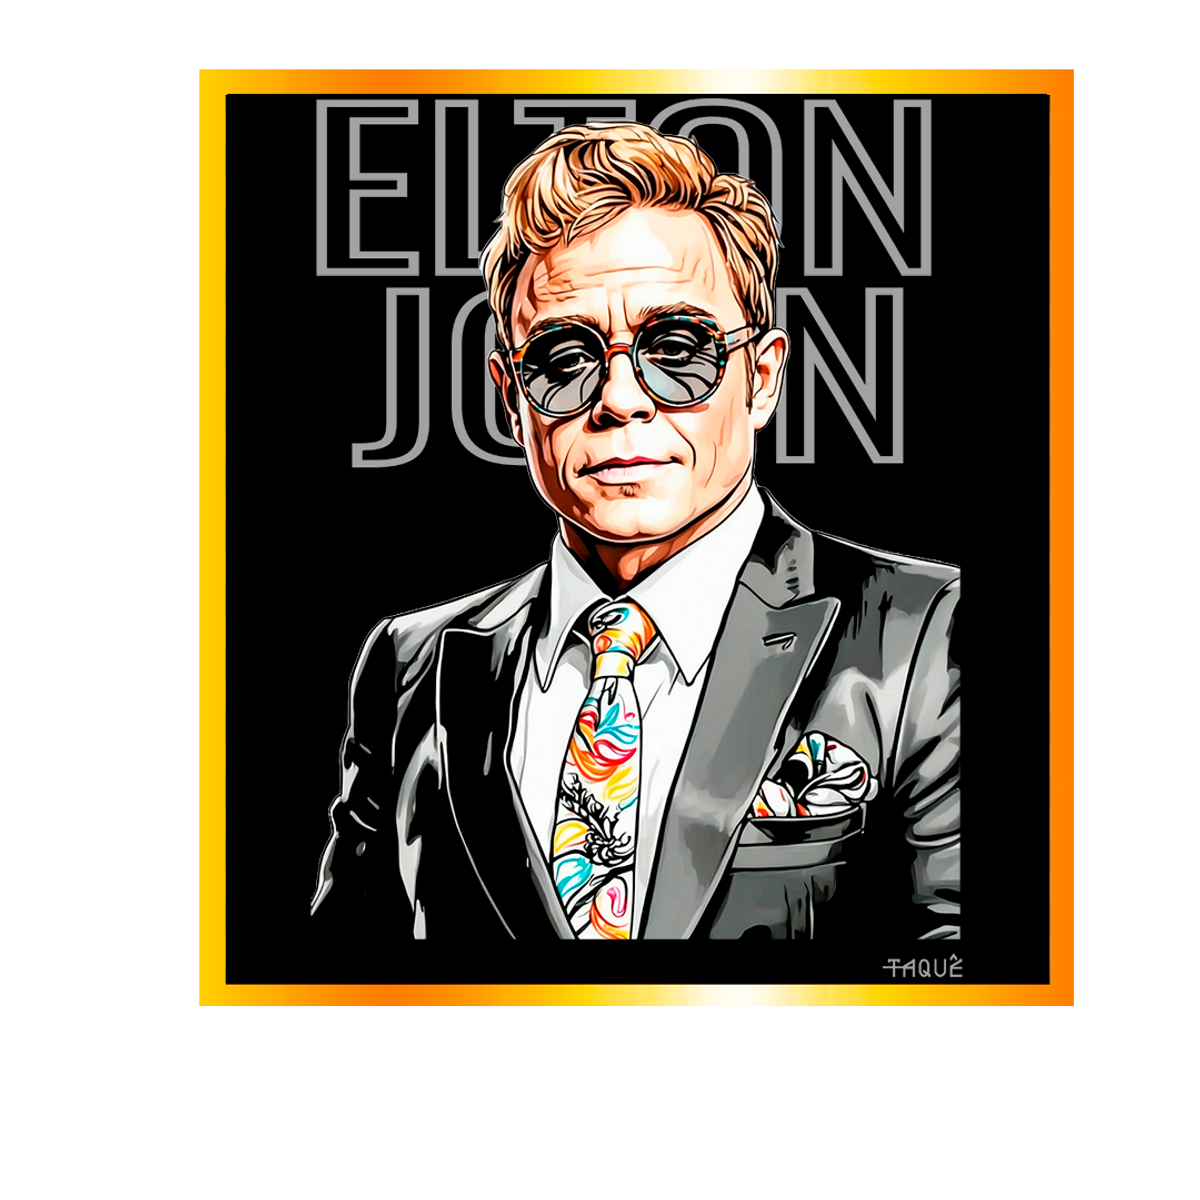 Nome do produto: Camiseta Taquê Lendas - Elton John